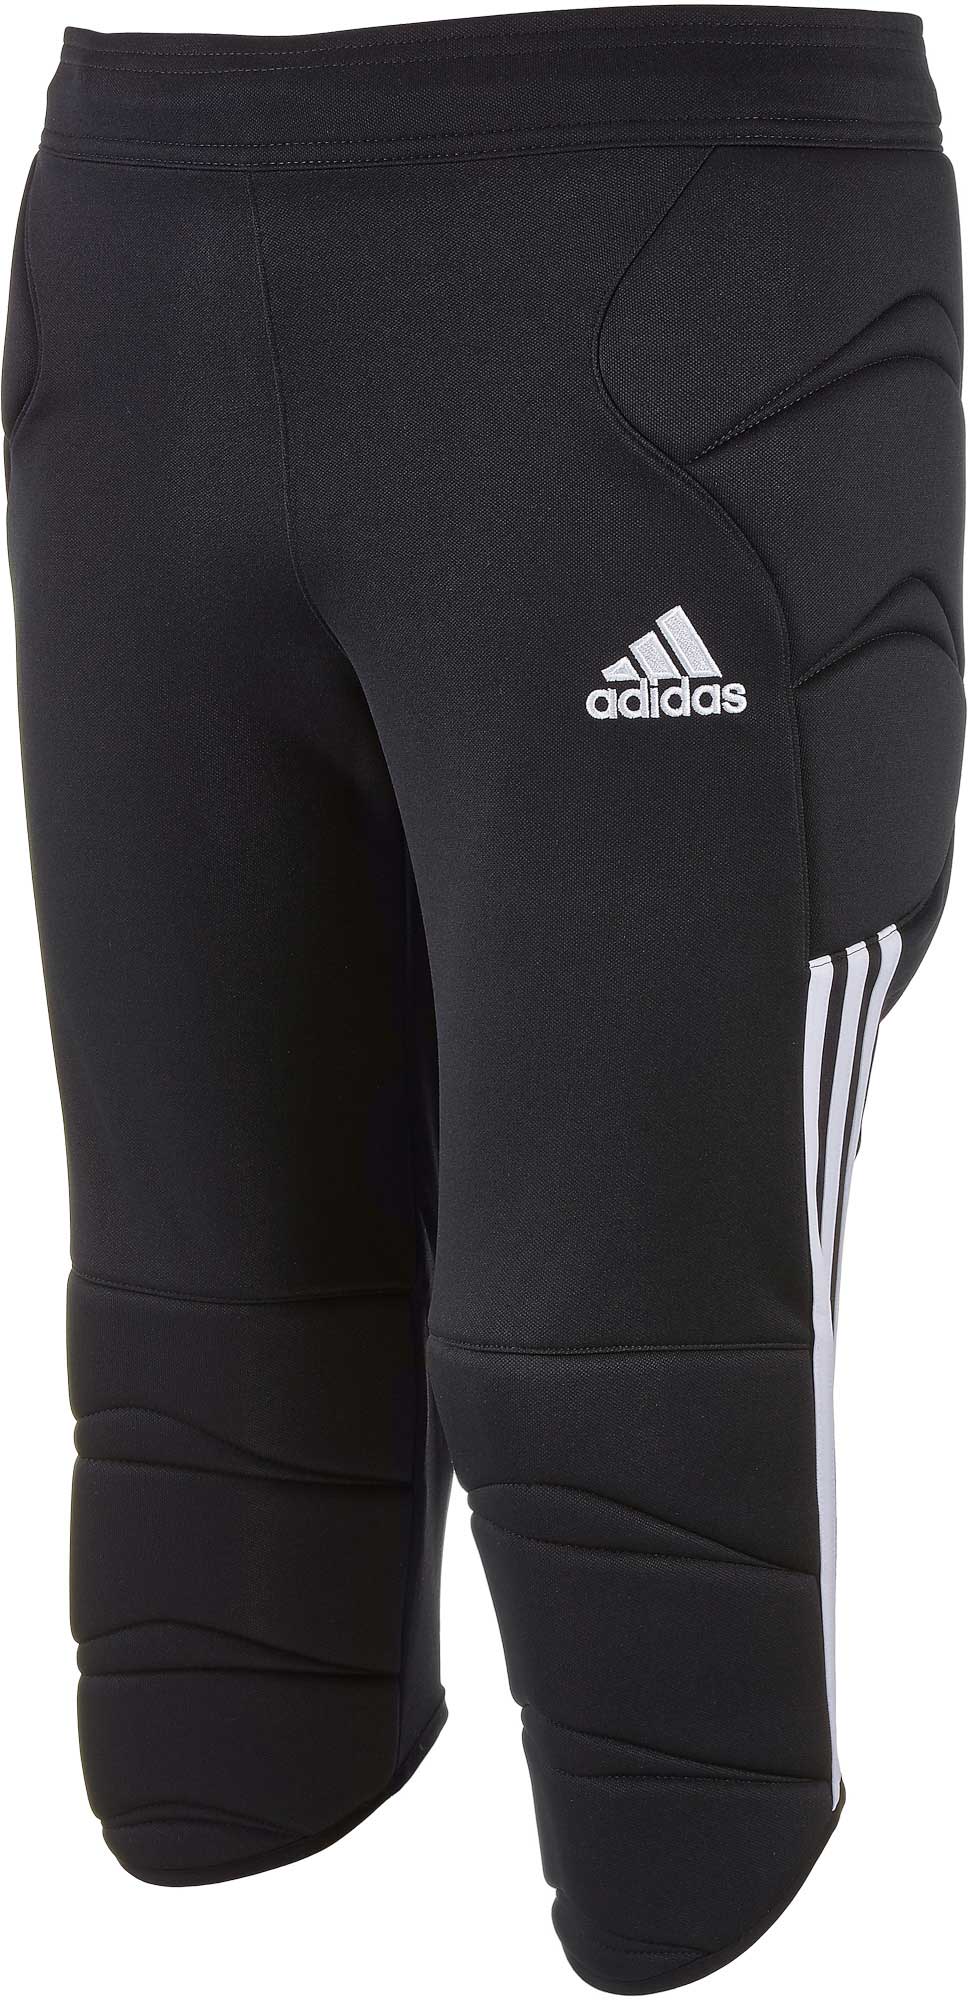 adidas padded goalkeeper pants